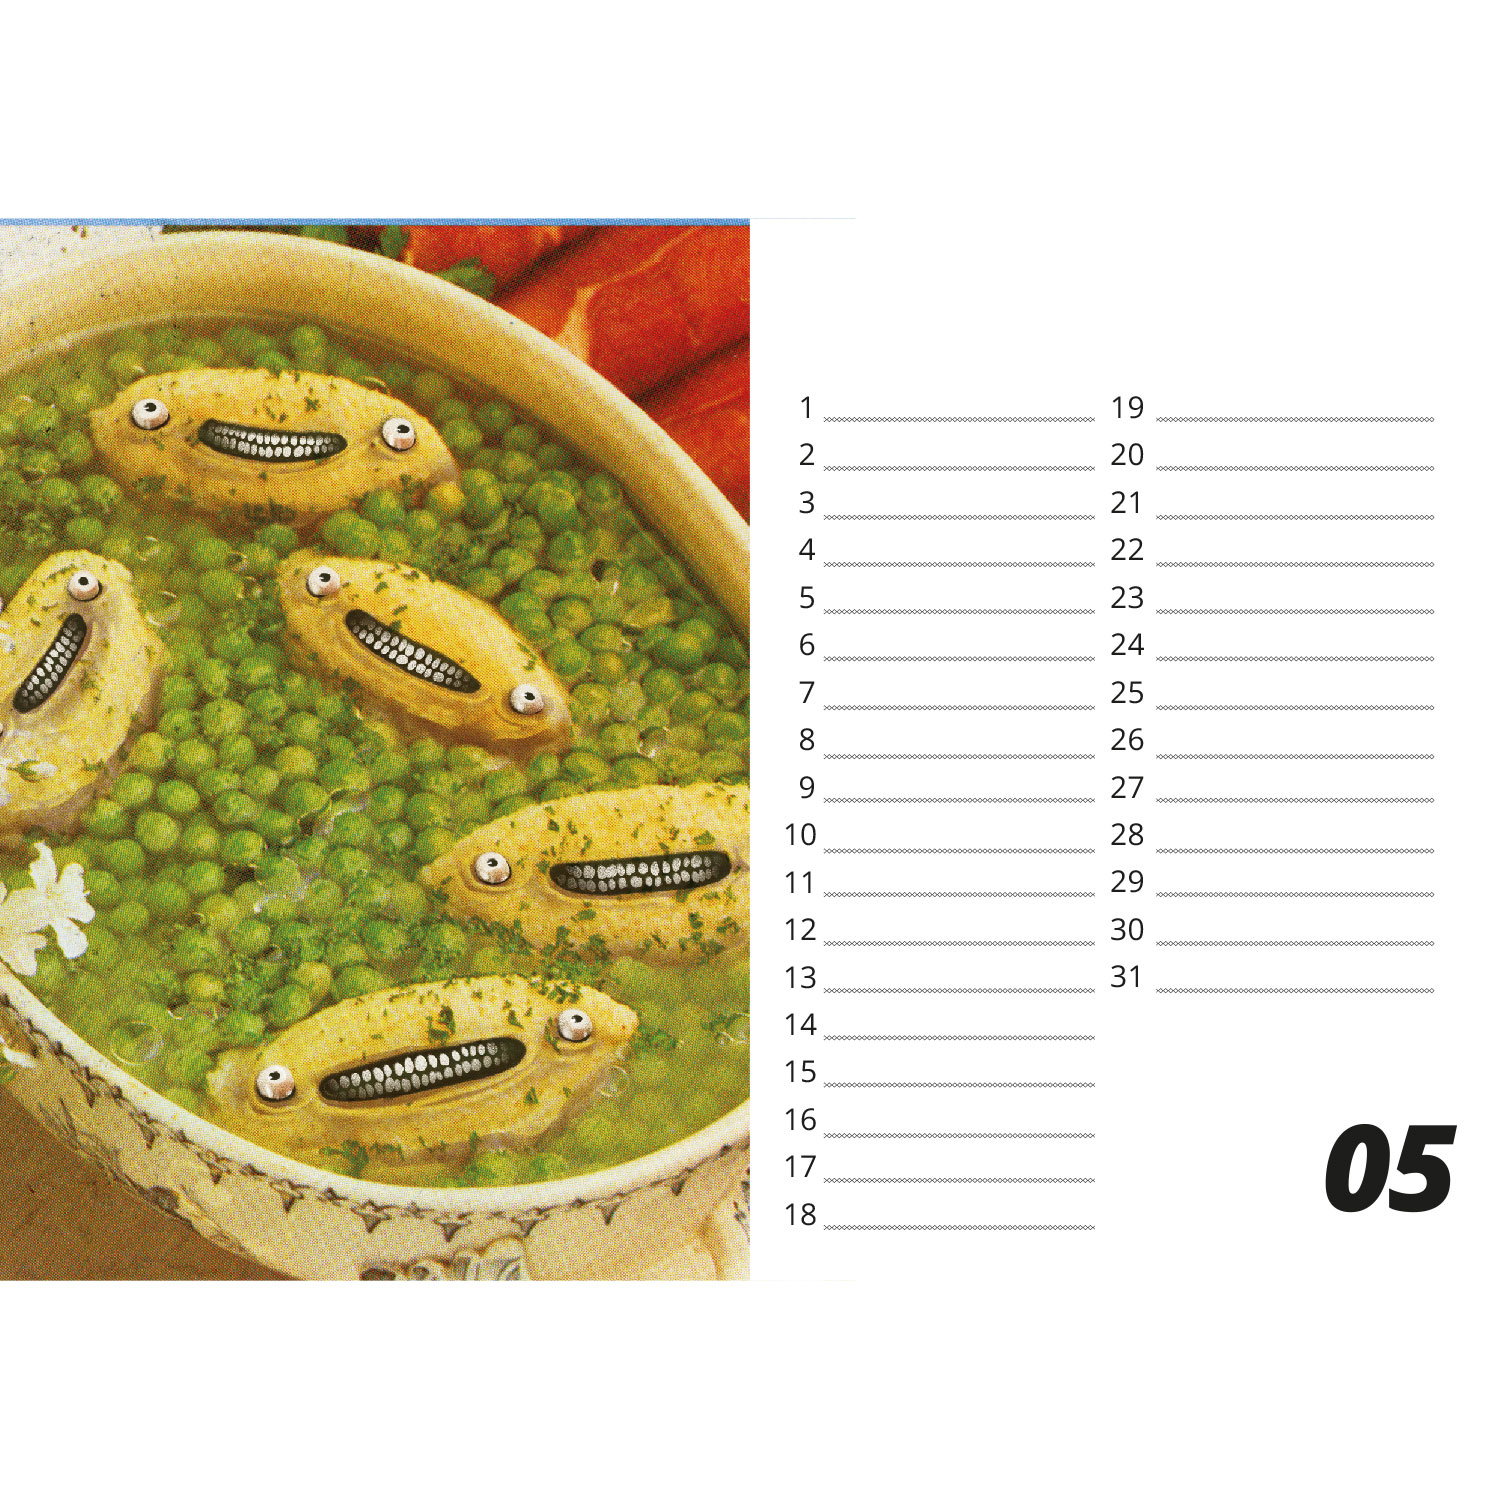 You are what you eat desk calendar - A5 landscape format